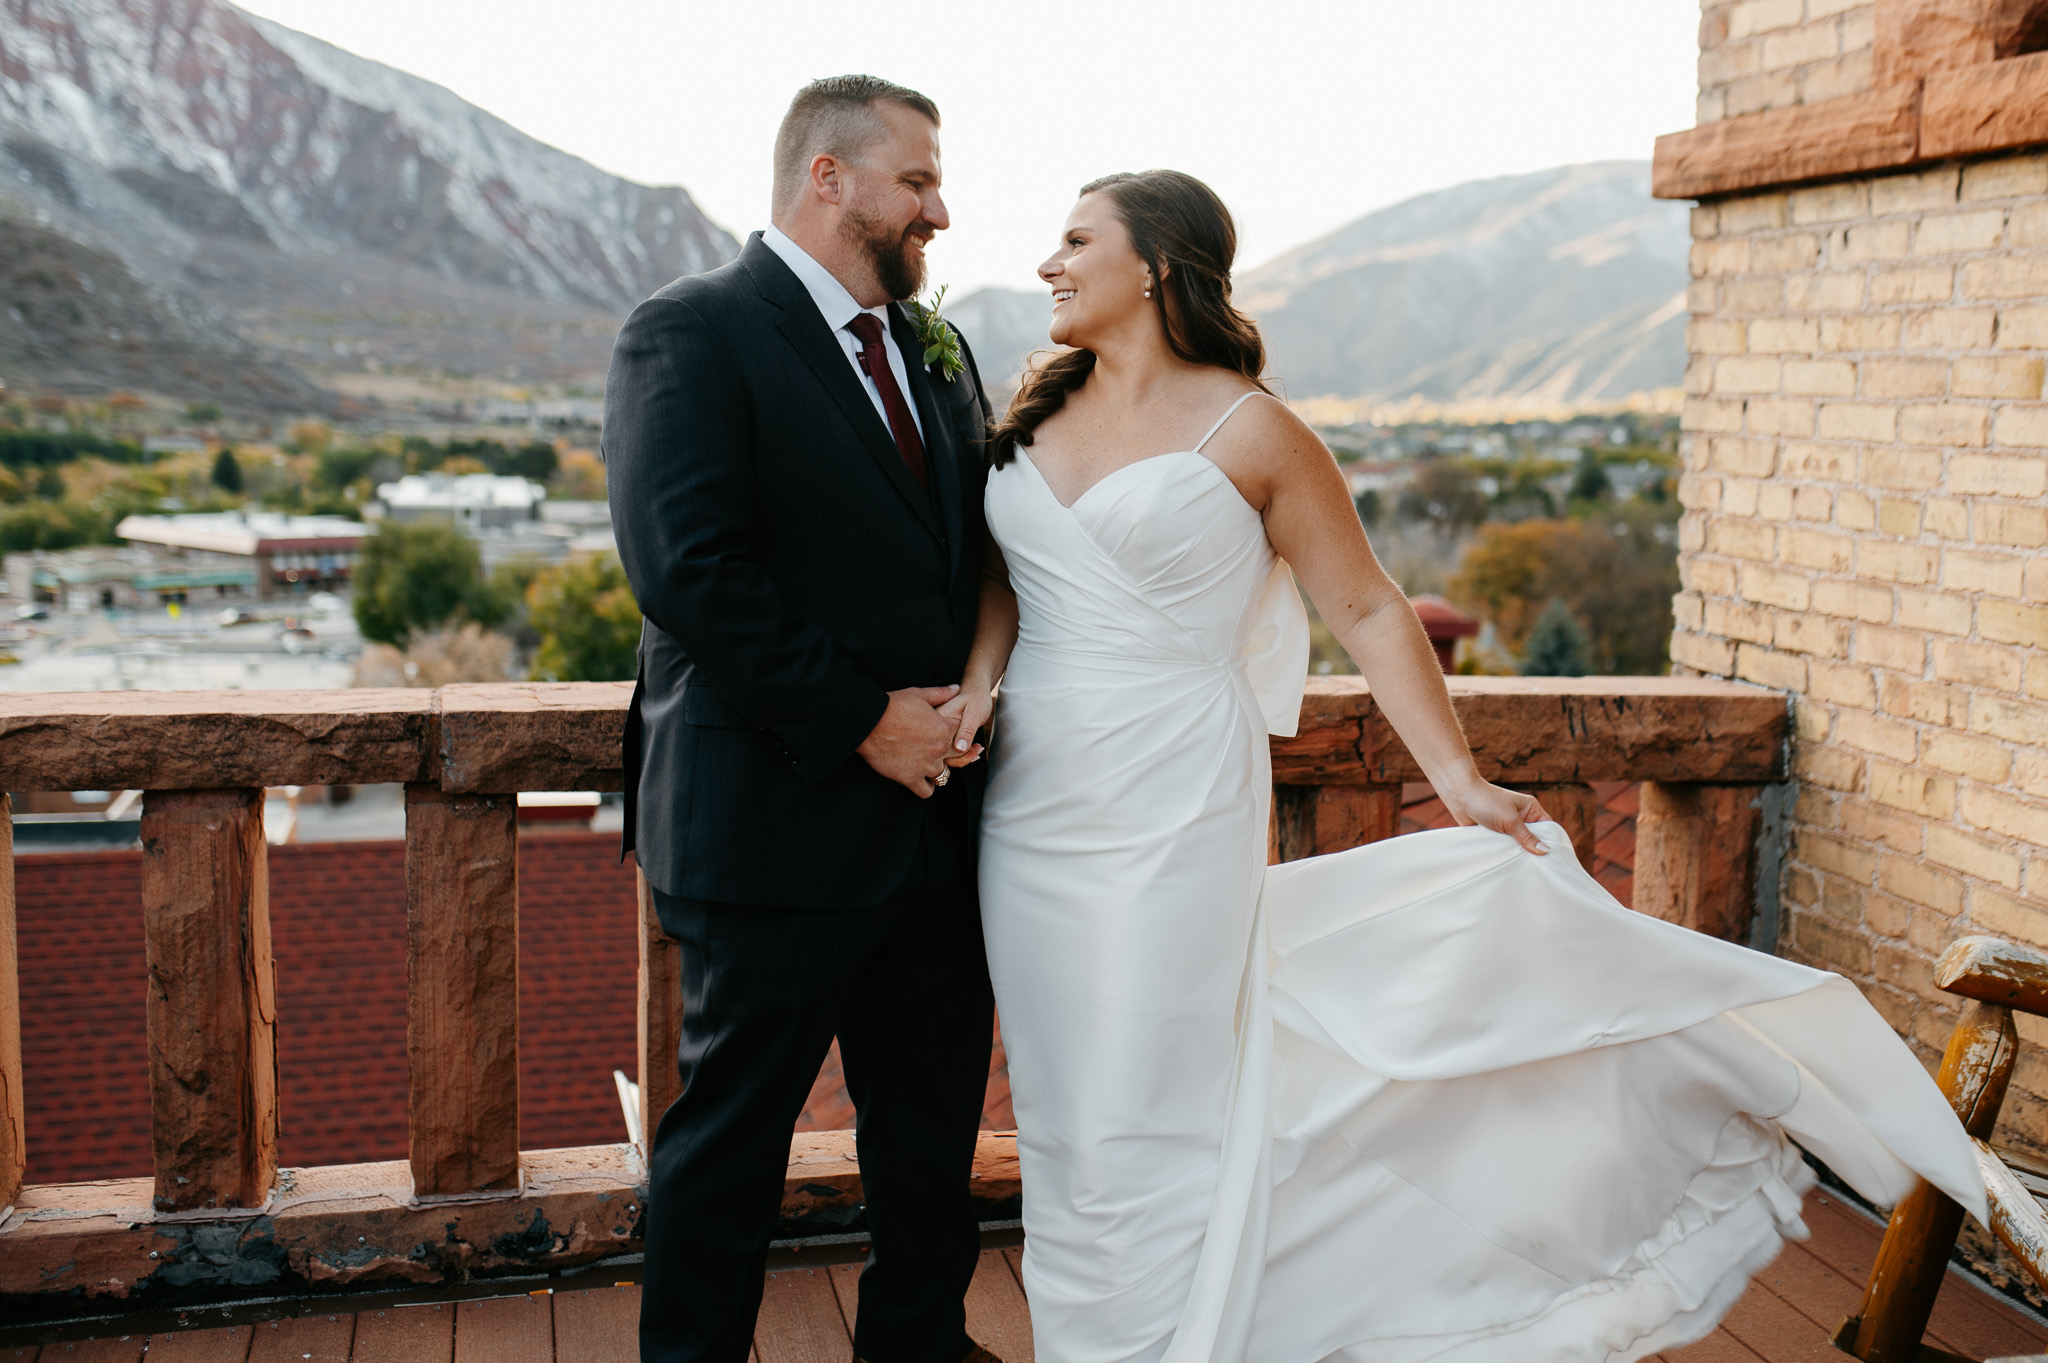 couple photographed at Hotel Colorado Glenwood Springs denver wedding photographer autumn mountains vail idaho springs winter park aspen